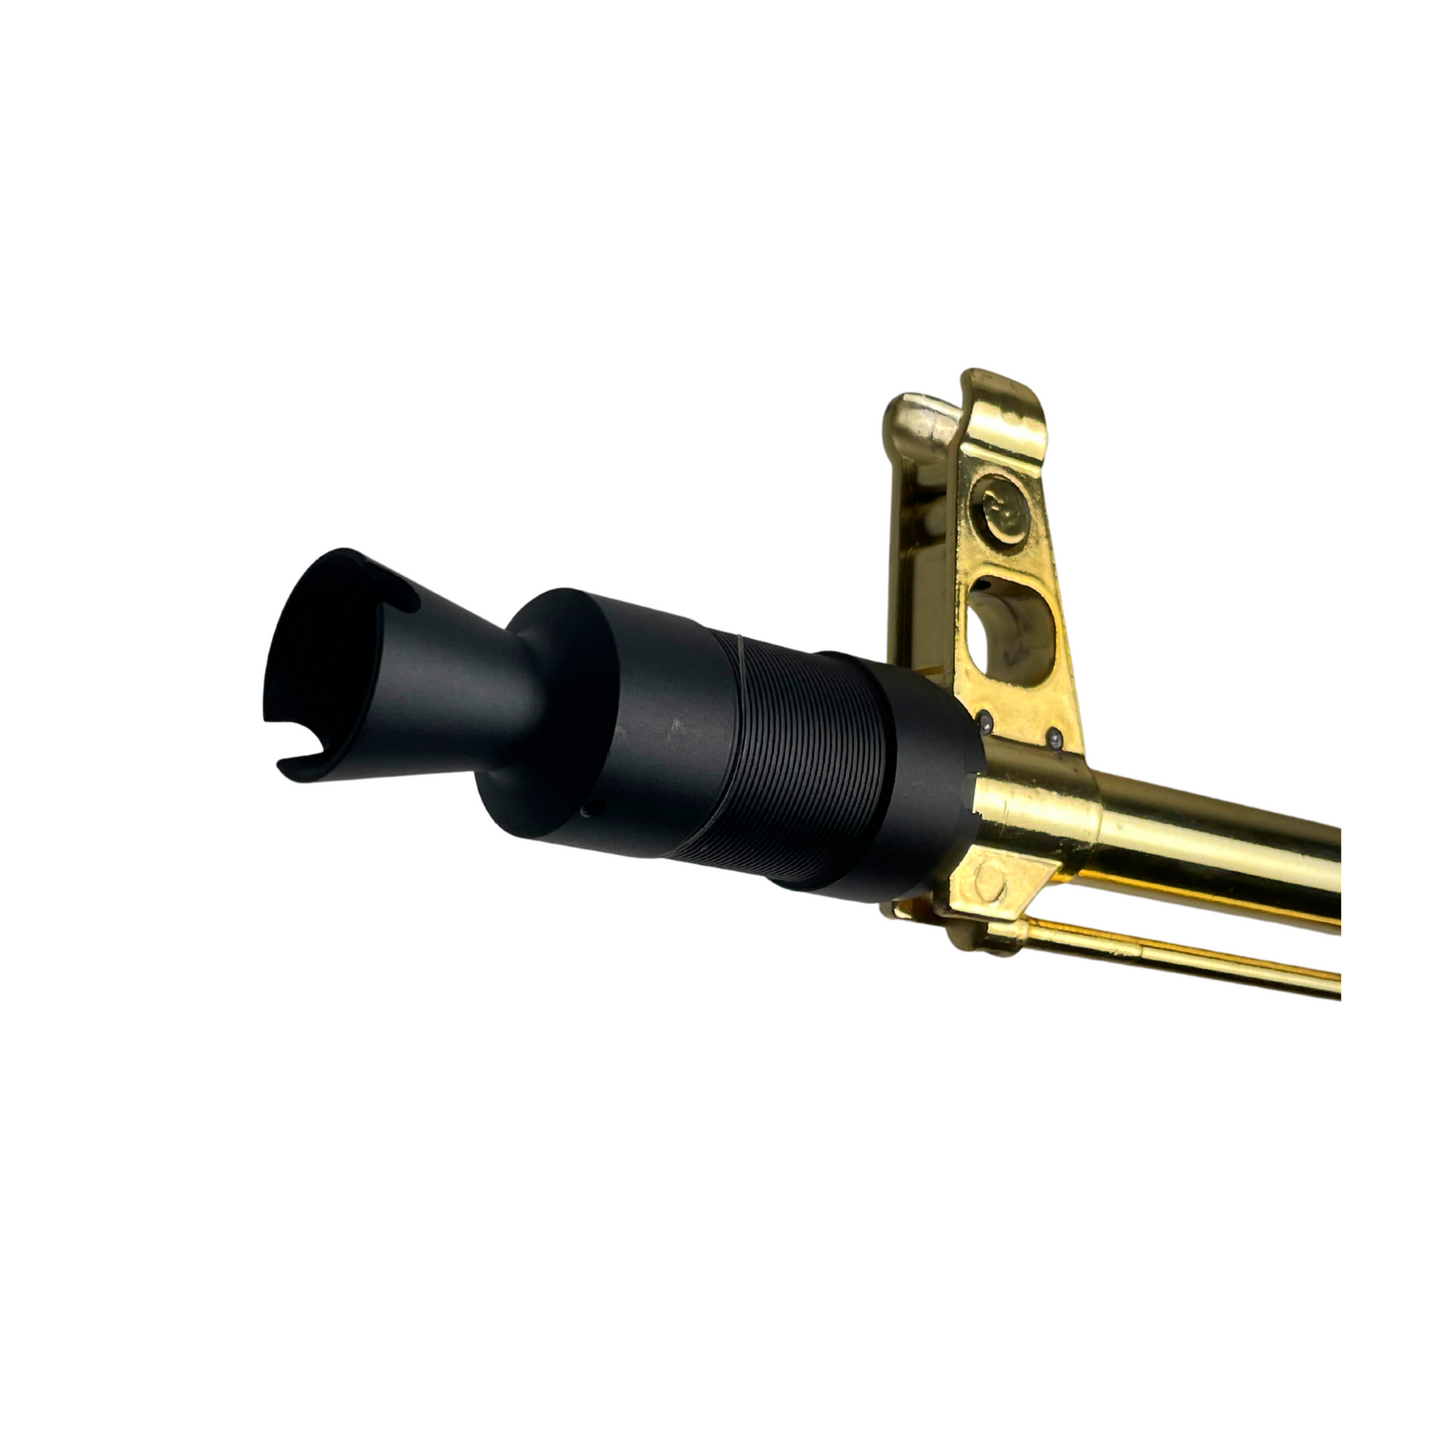 Double Bell Gold AK47 Metal/ Wood - Gel Blaster